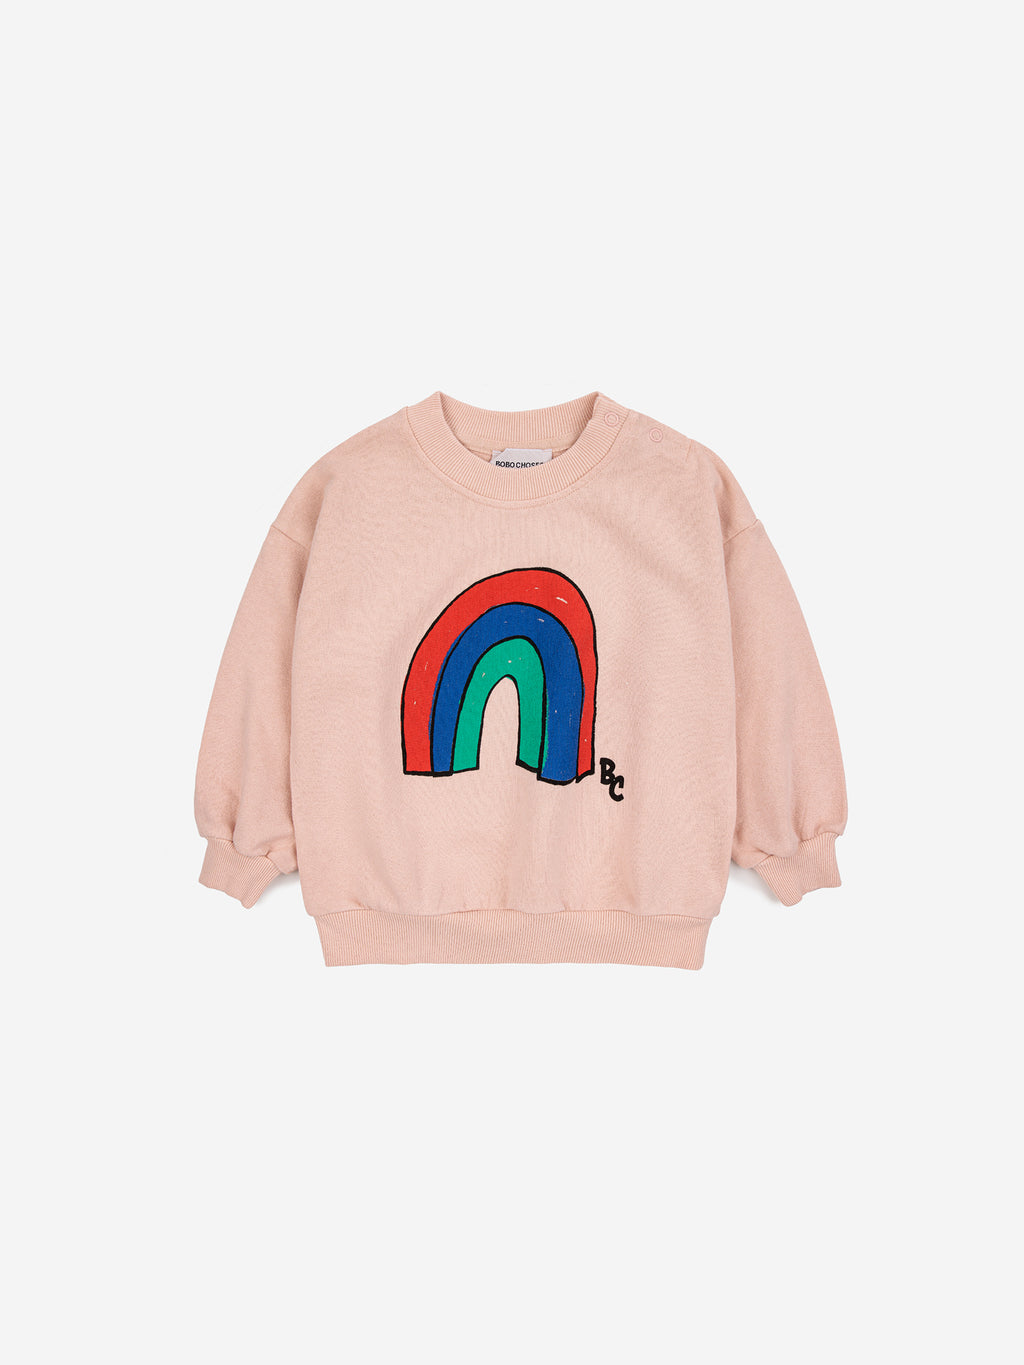 Bobo Choses Baby Rainbow Sweatshirt - Light Pink